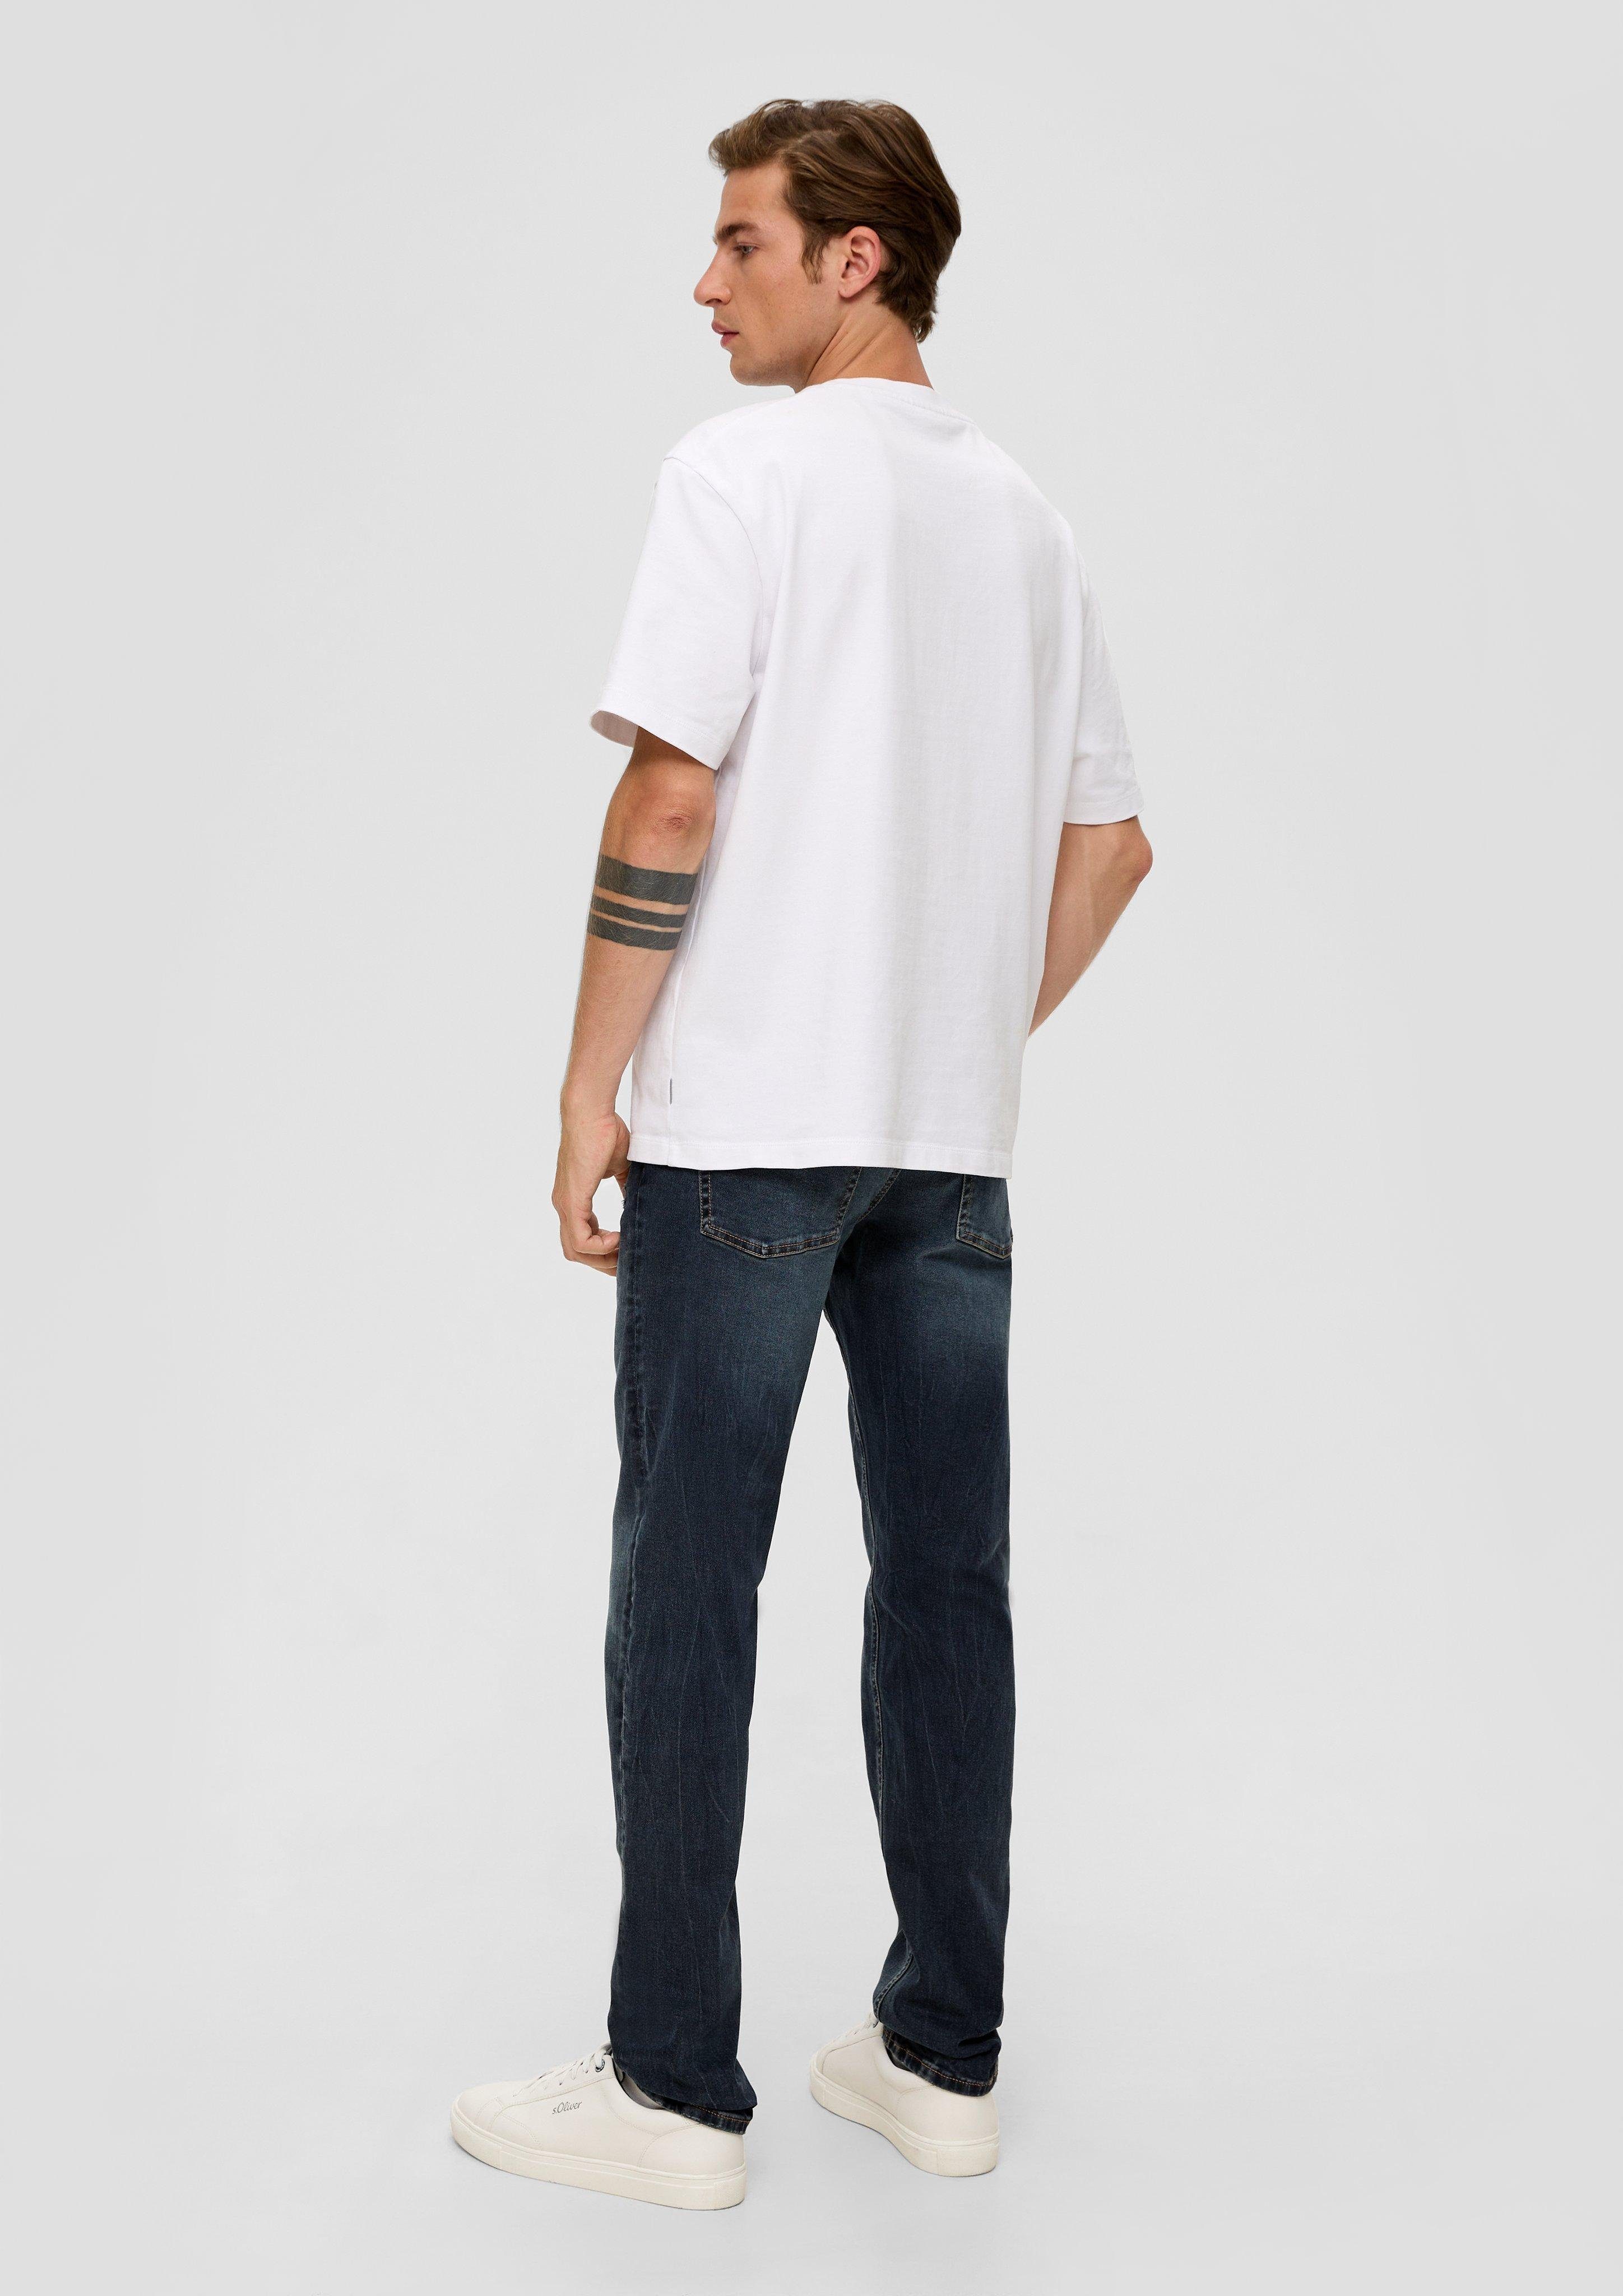 s.Oliver Stoffhose Jeans Rise Mid Fit / Label-Patch, Slim dunkelblau / Nelio Slim / Destroyes Leg